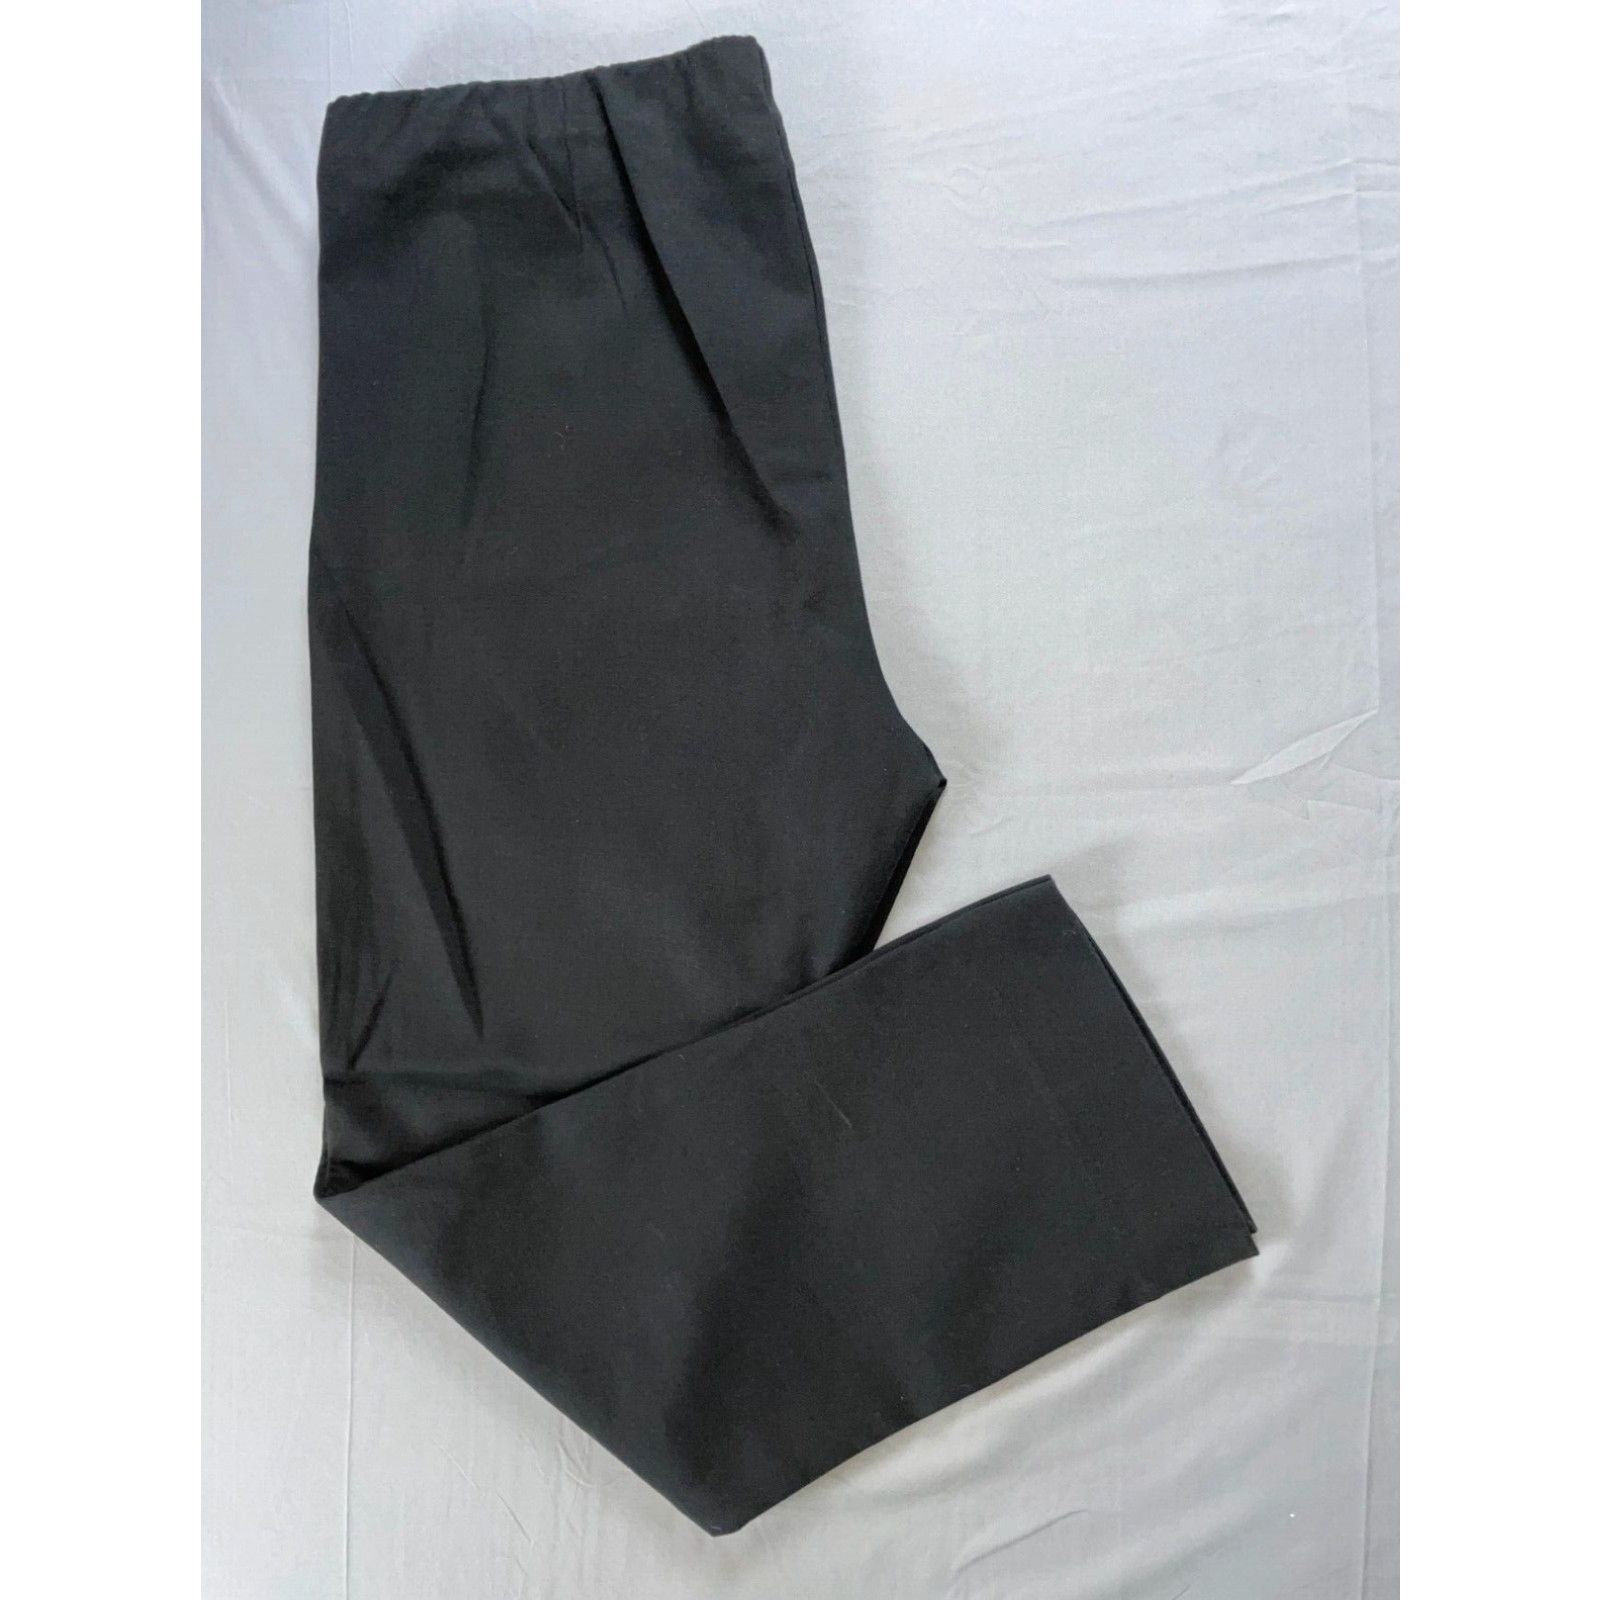 Vintage J.Jill Essential Cotton Stretch Pull On Pants. Black, Women's Size 16. EUC!! Size ONE SIZE - 1 Preview